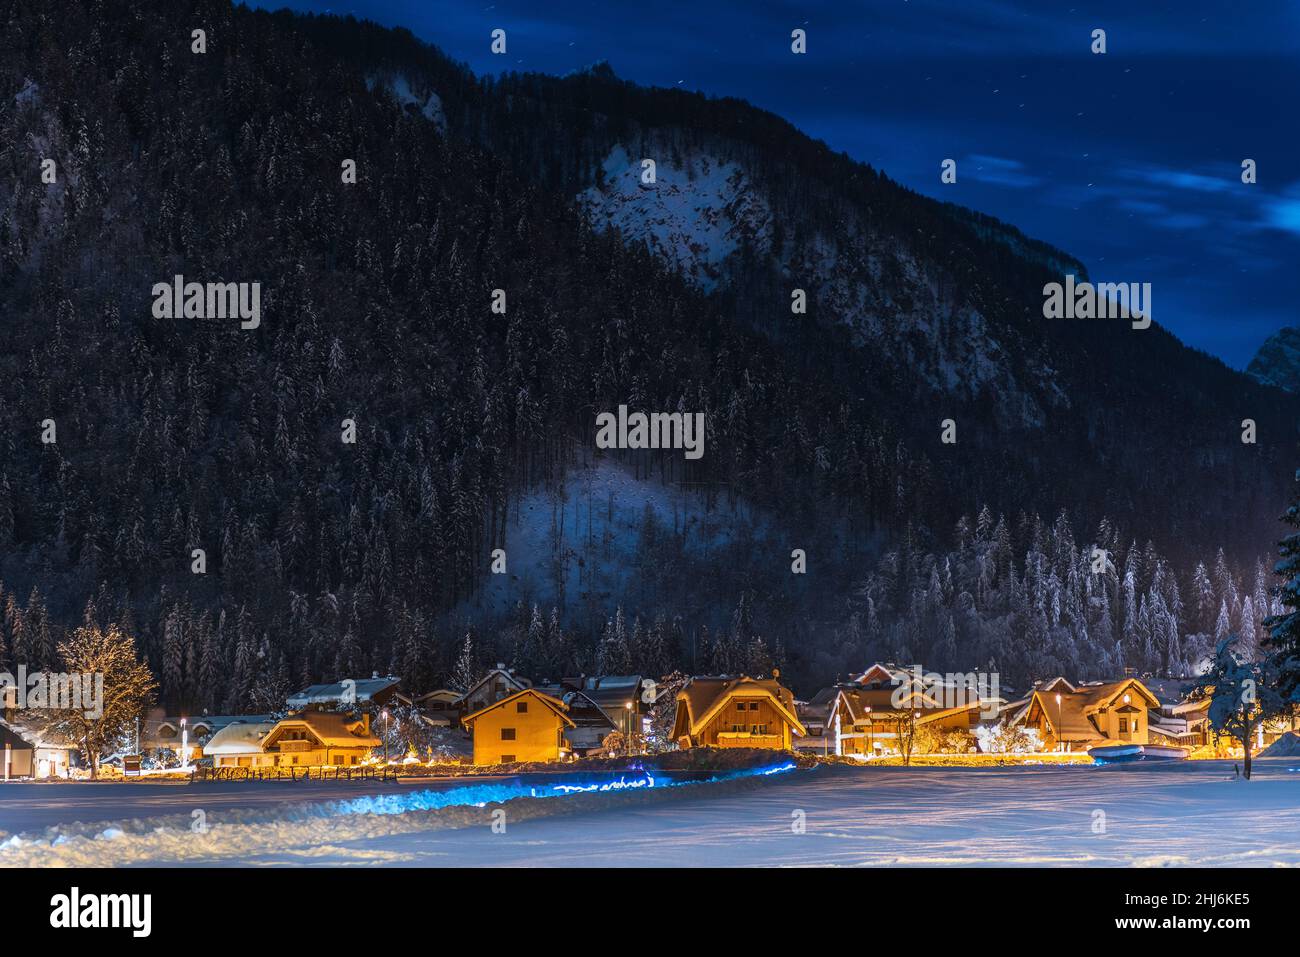 Noche nevada vista de invierno de un pueblo italiano de montaña. Malborghetto Valbruna, Alpes Julianos, provincia de Udine, Friuli Venezia Giulia, Italia. Foto de stock